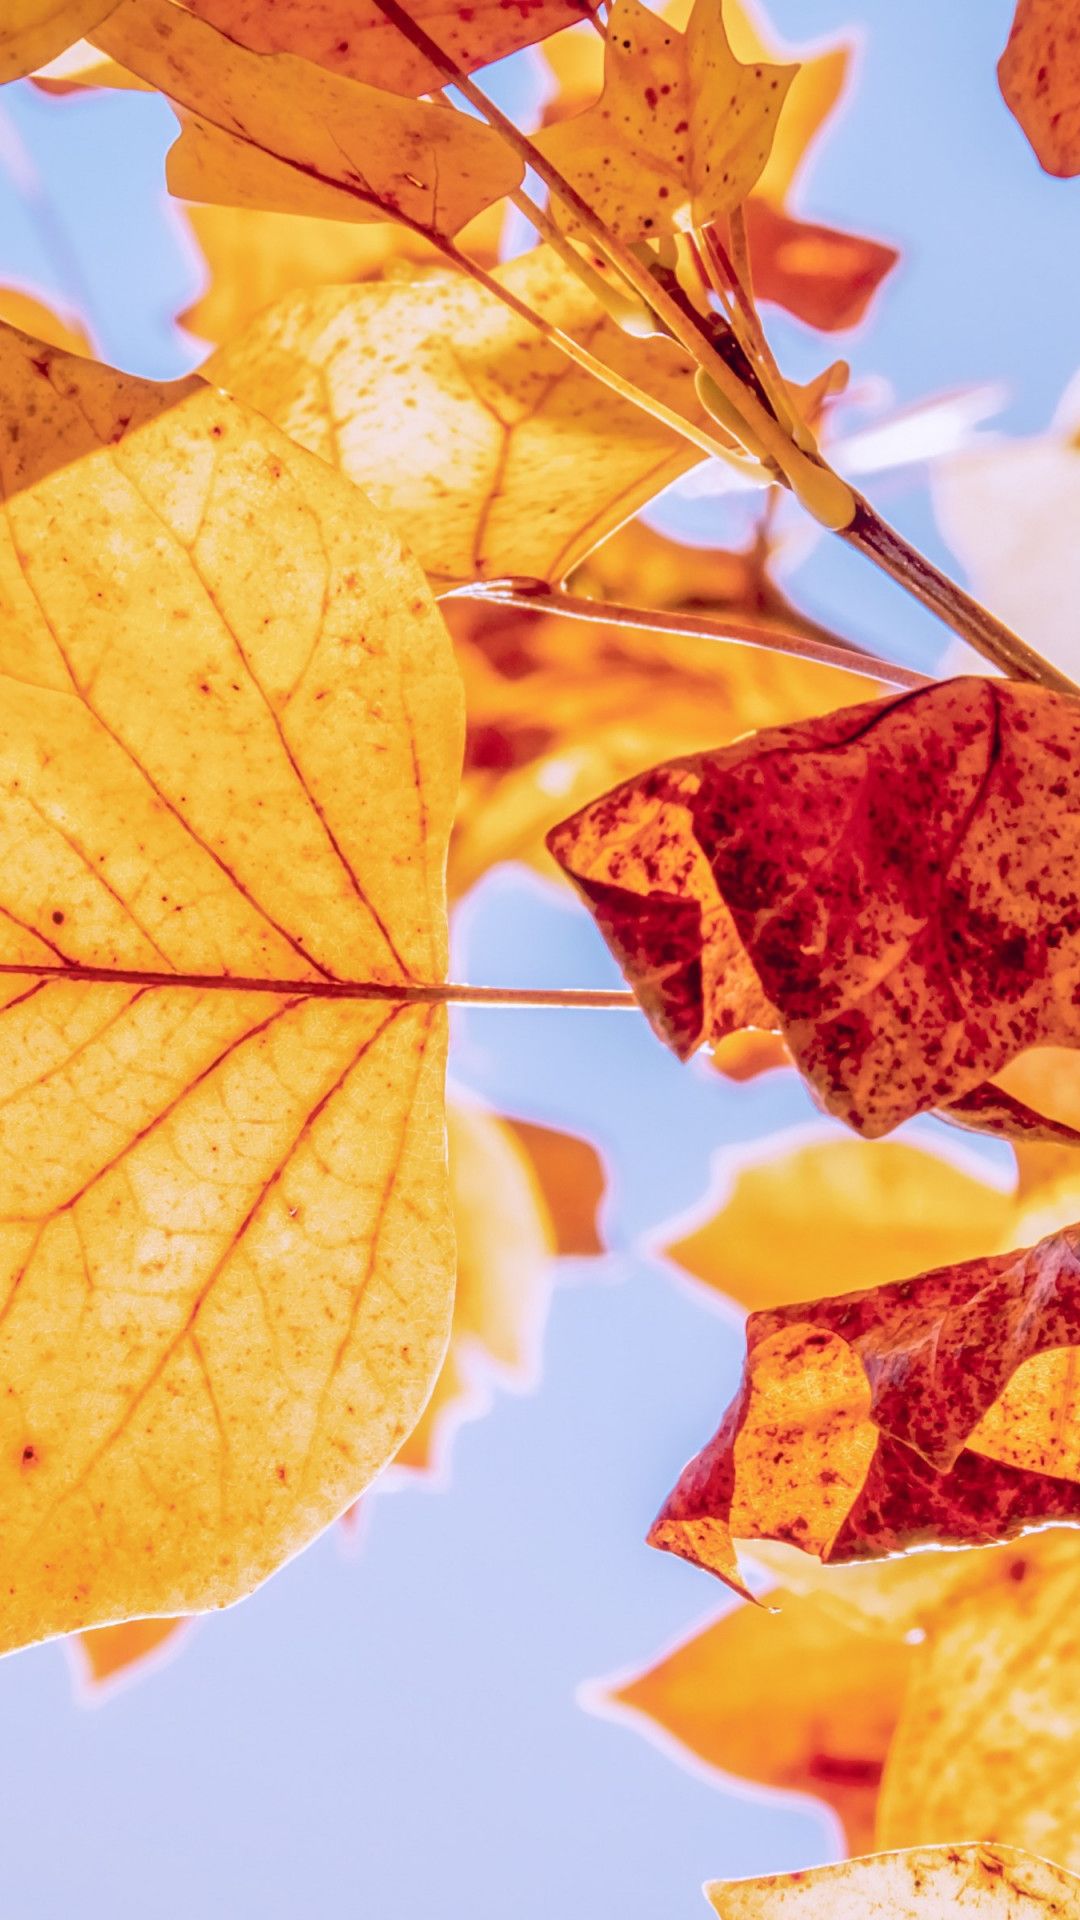 Download wallpaper: Best Autumn leaves 1080x1920